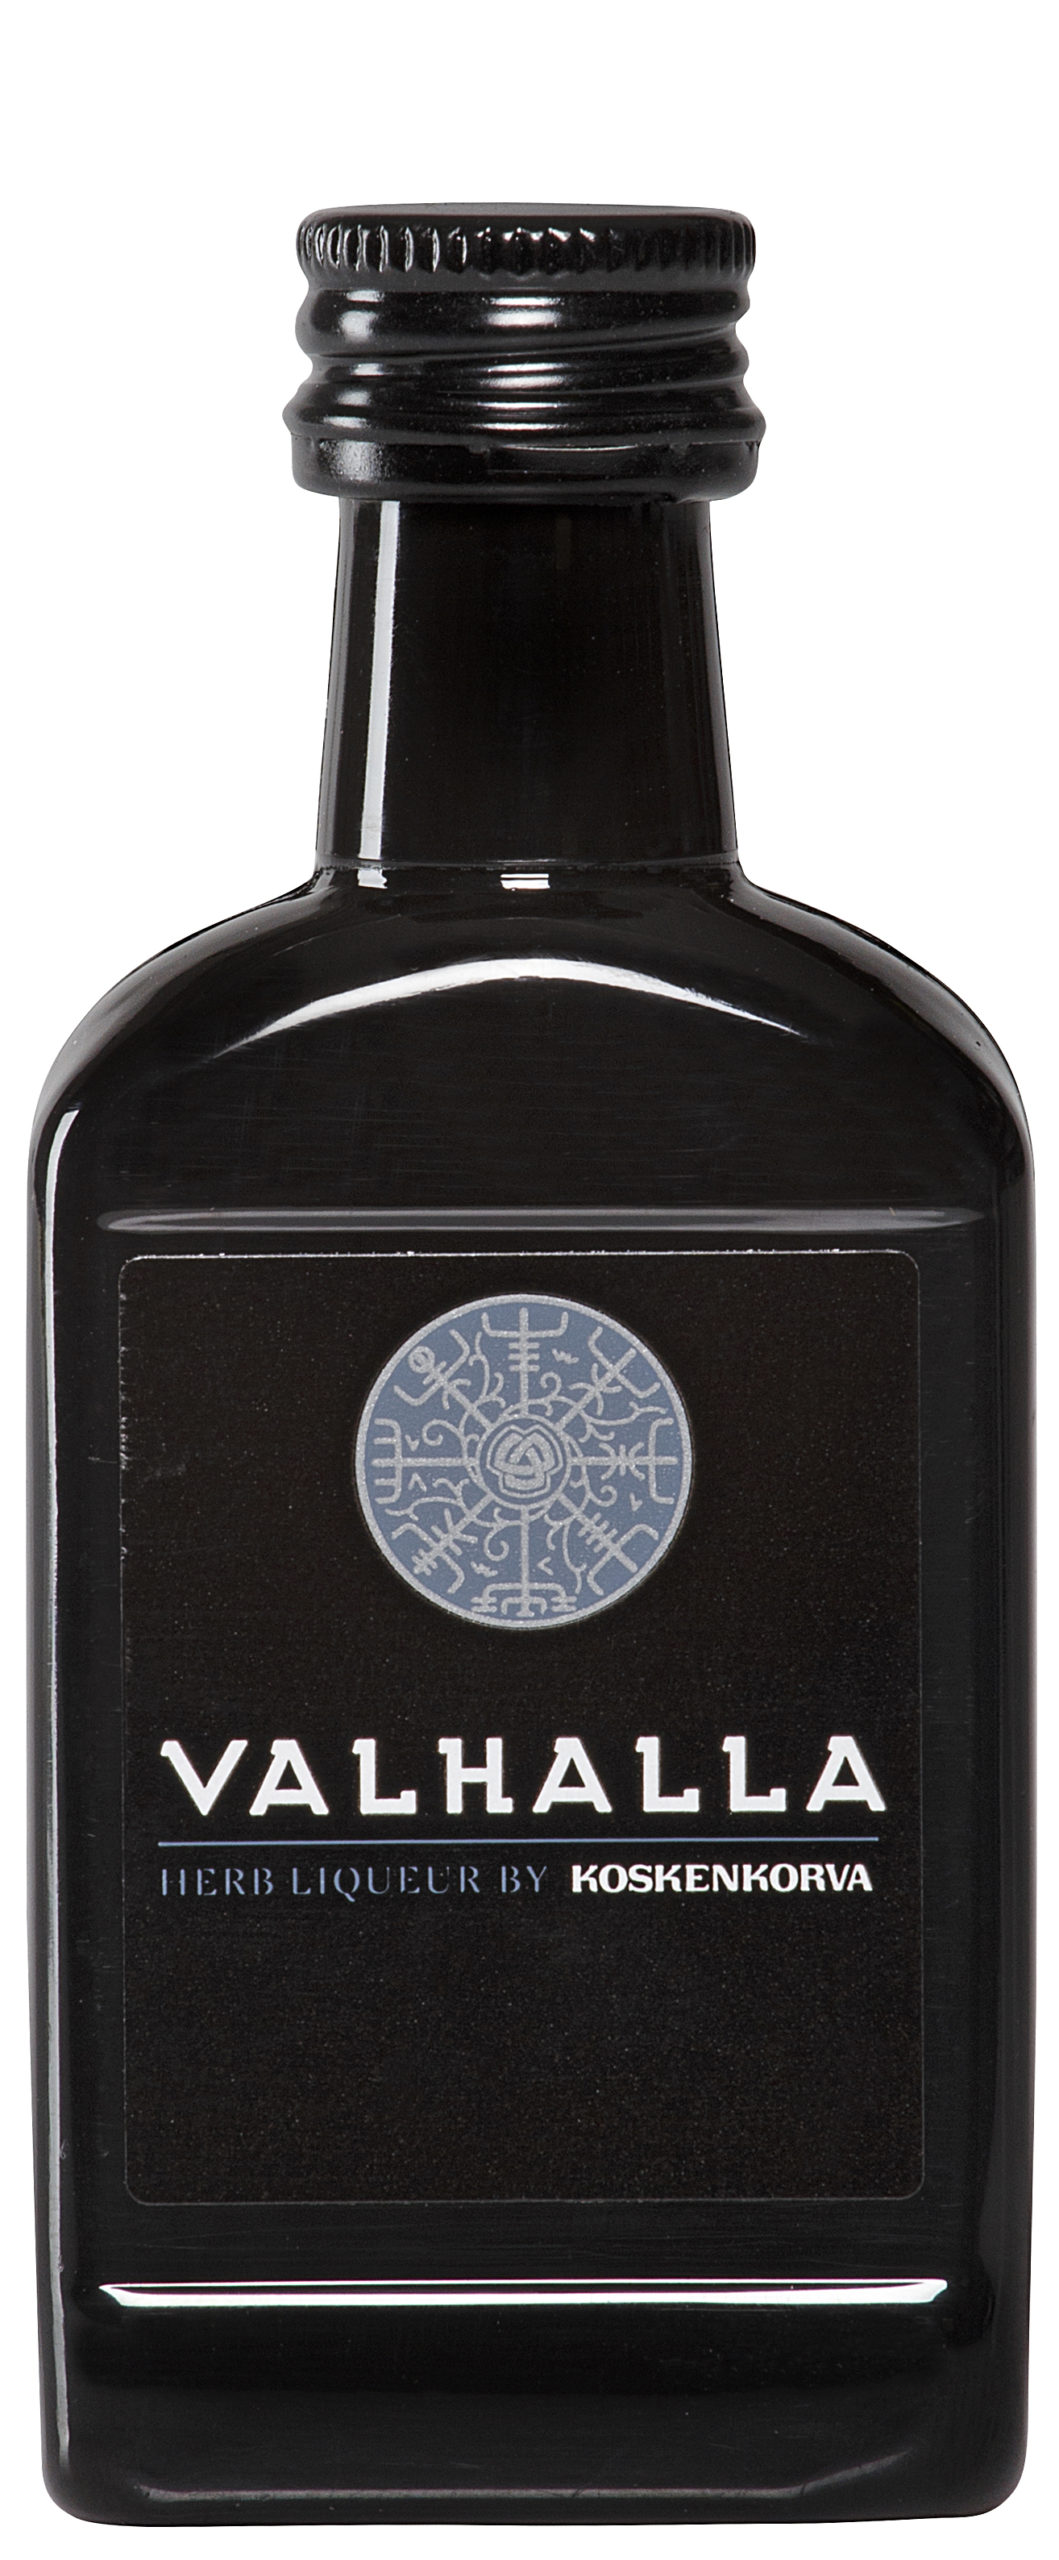 Valhalla plastic bottle